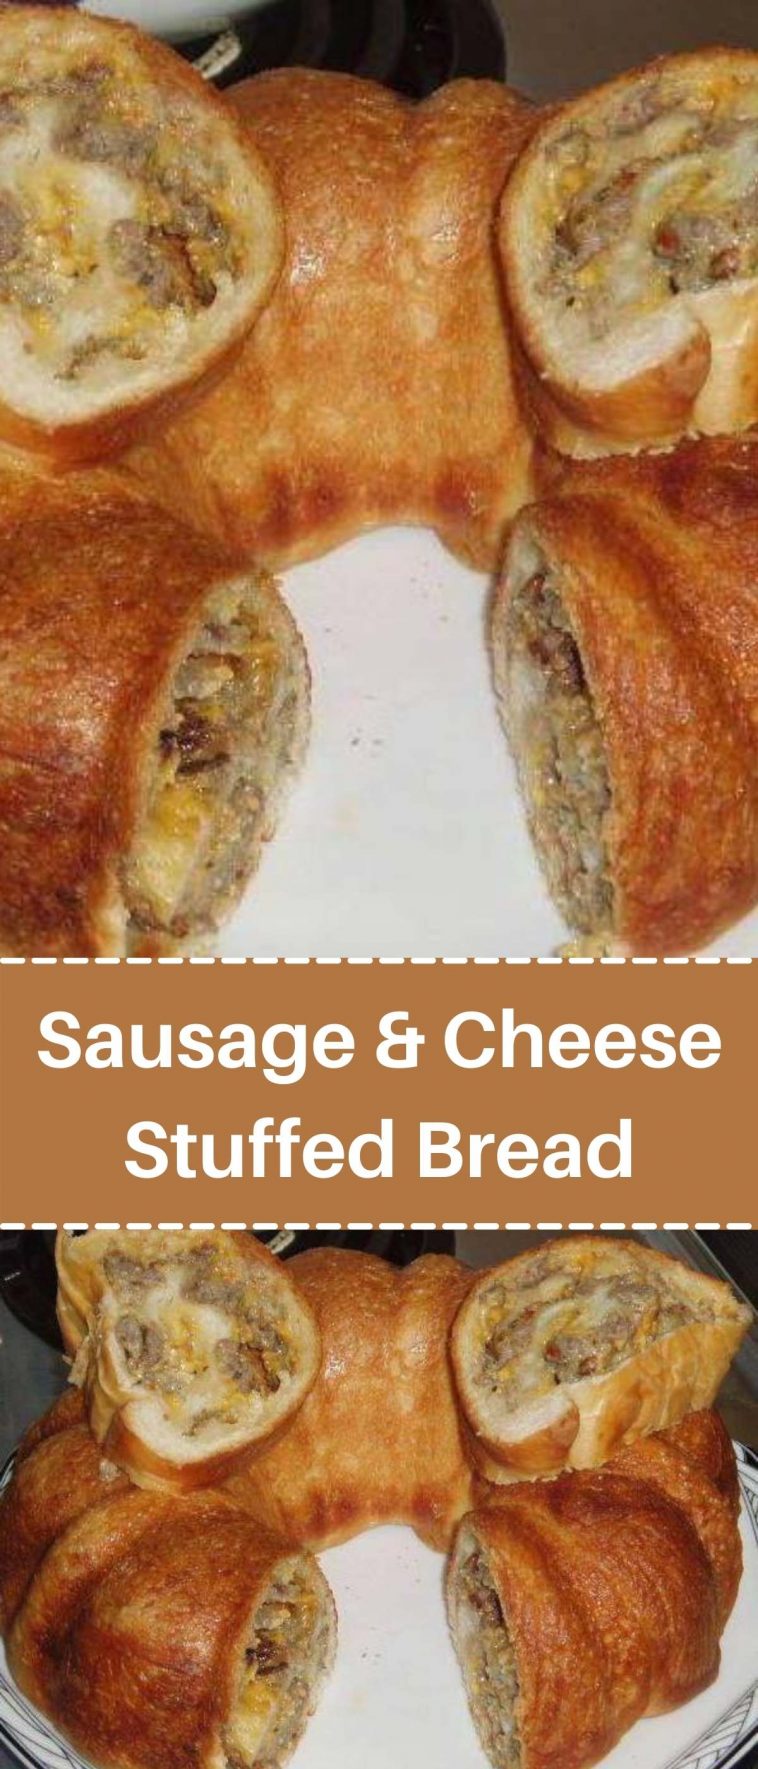 Sausage & Cheese Stuffed Bread